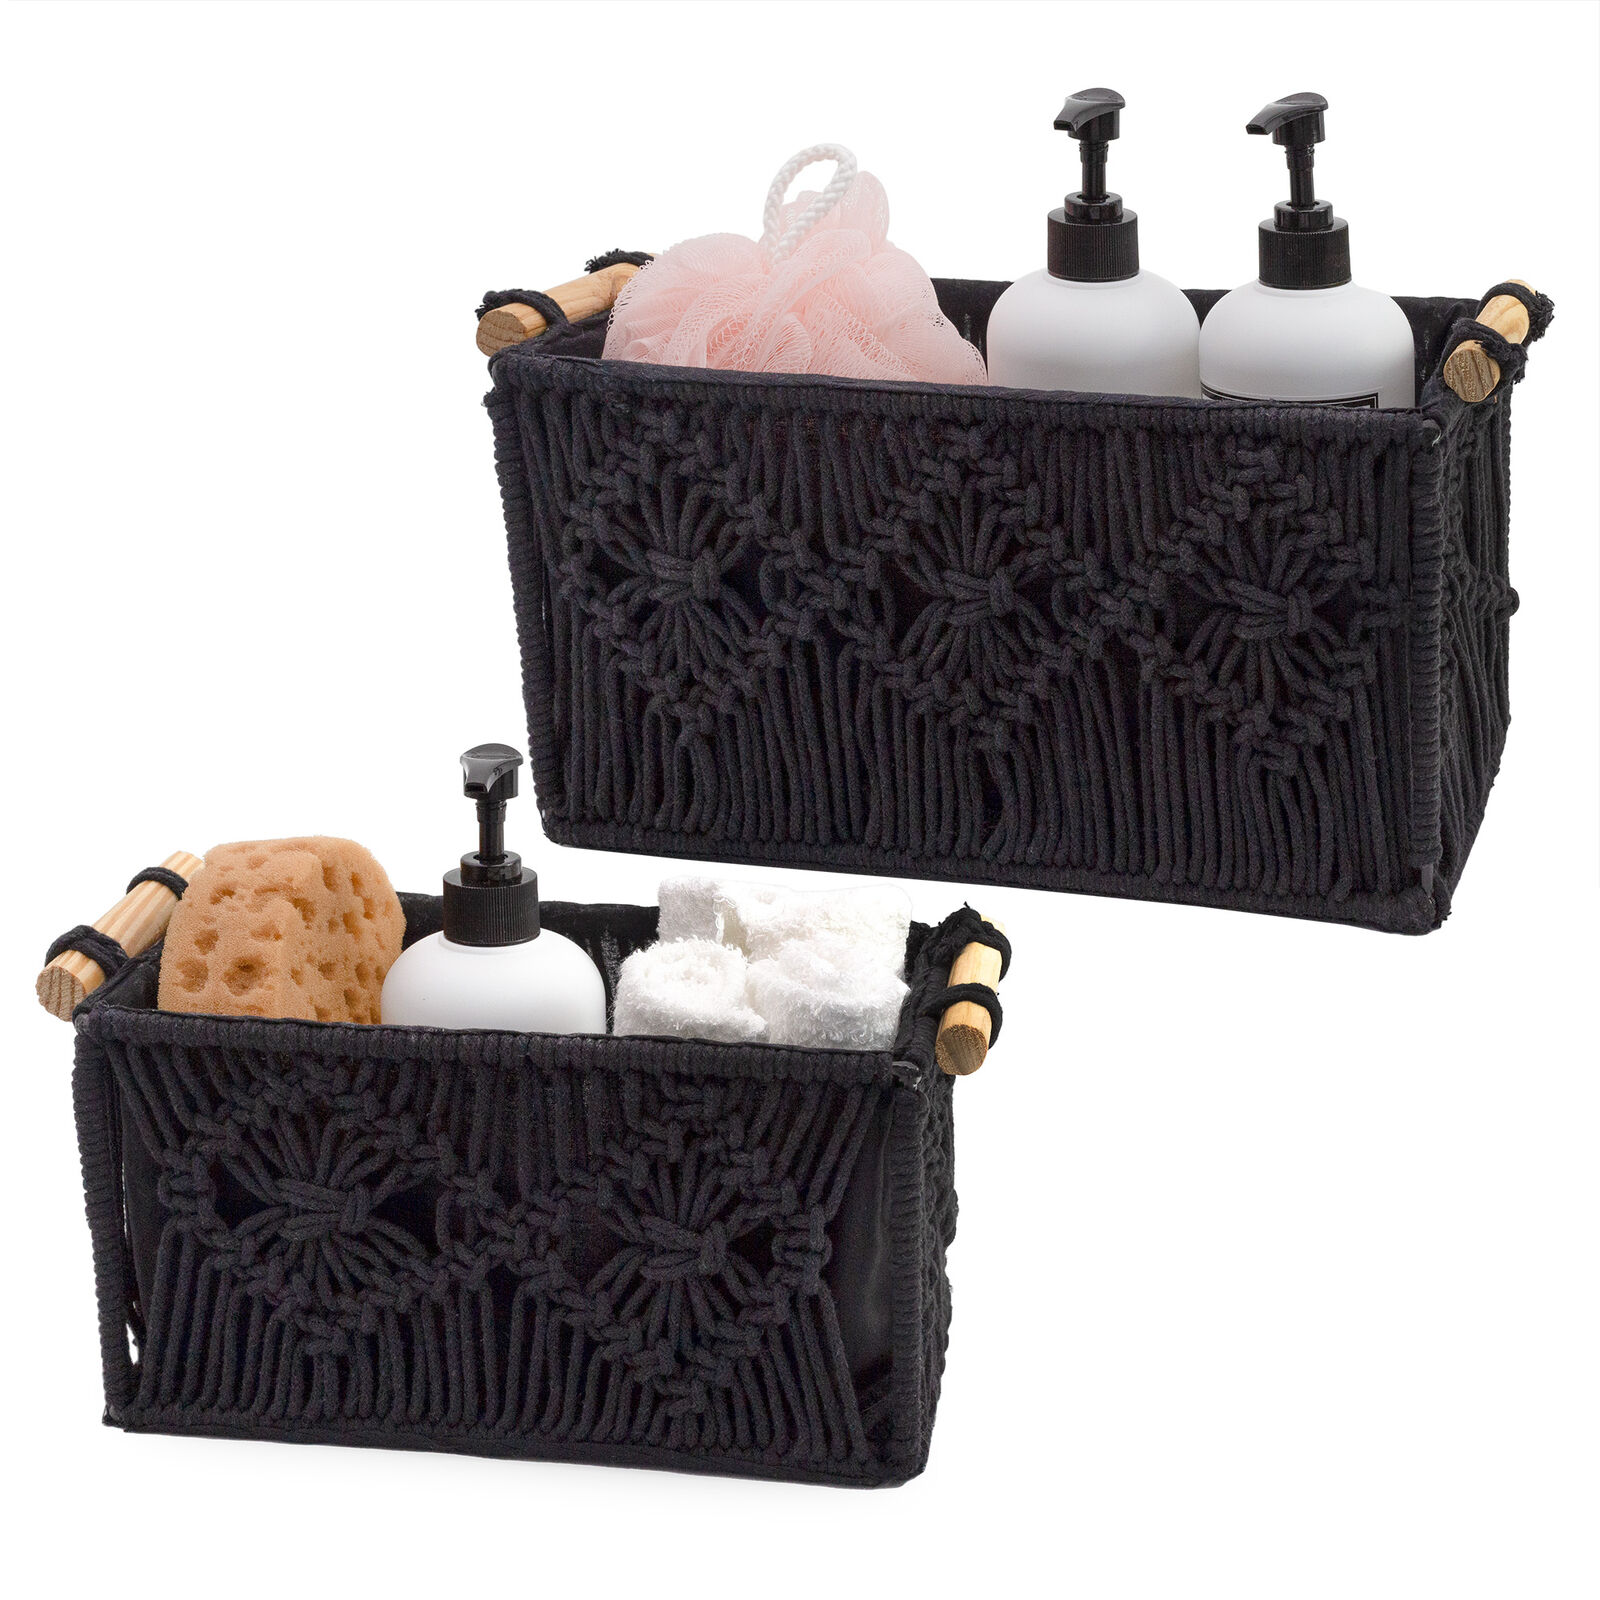 Black Boho Macrame Baskets 2pc Set, Decorative Storage Bins for Bathroom/Home